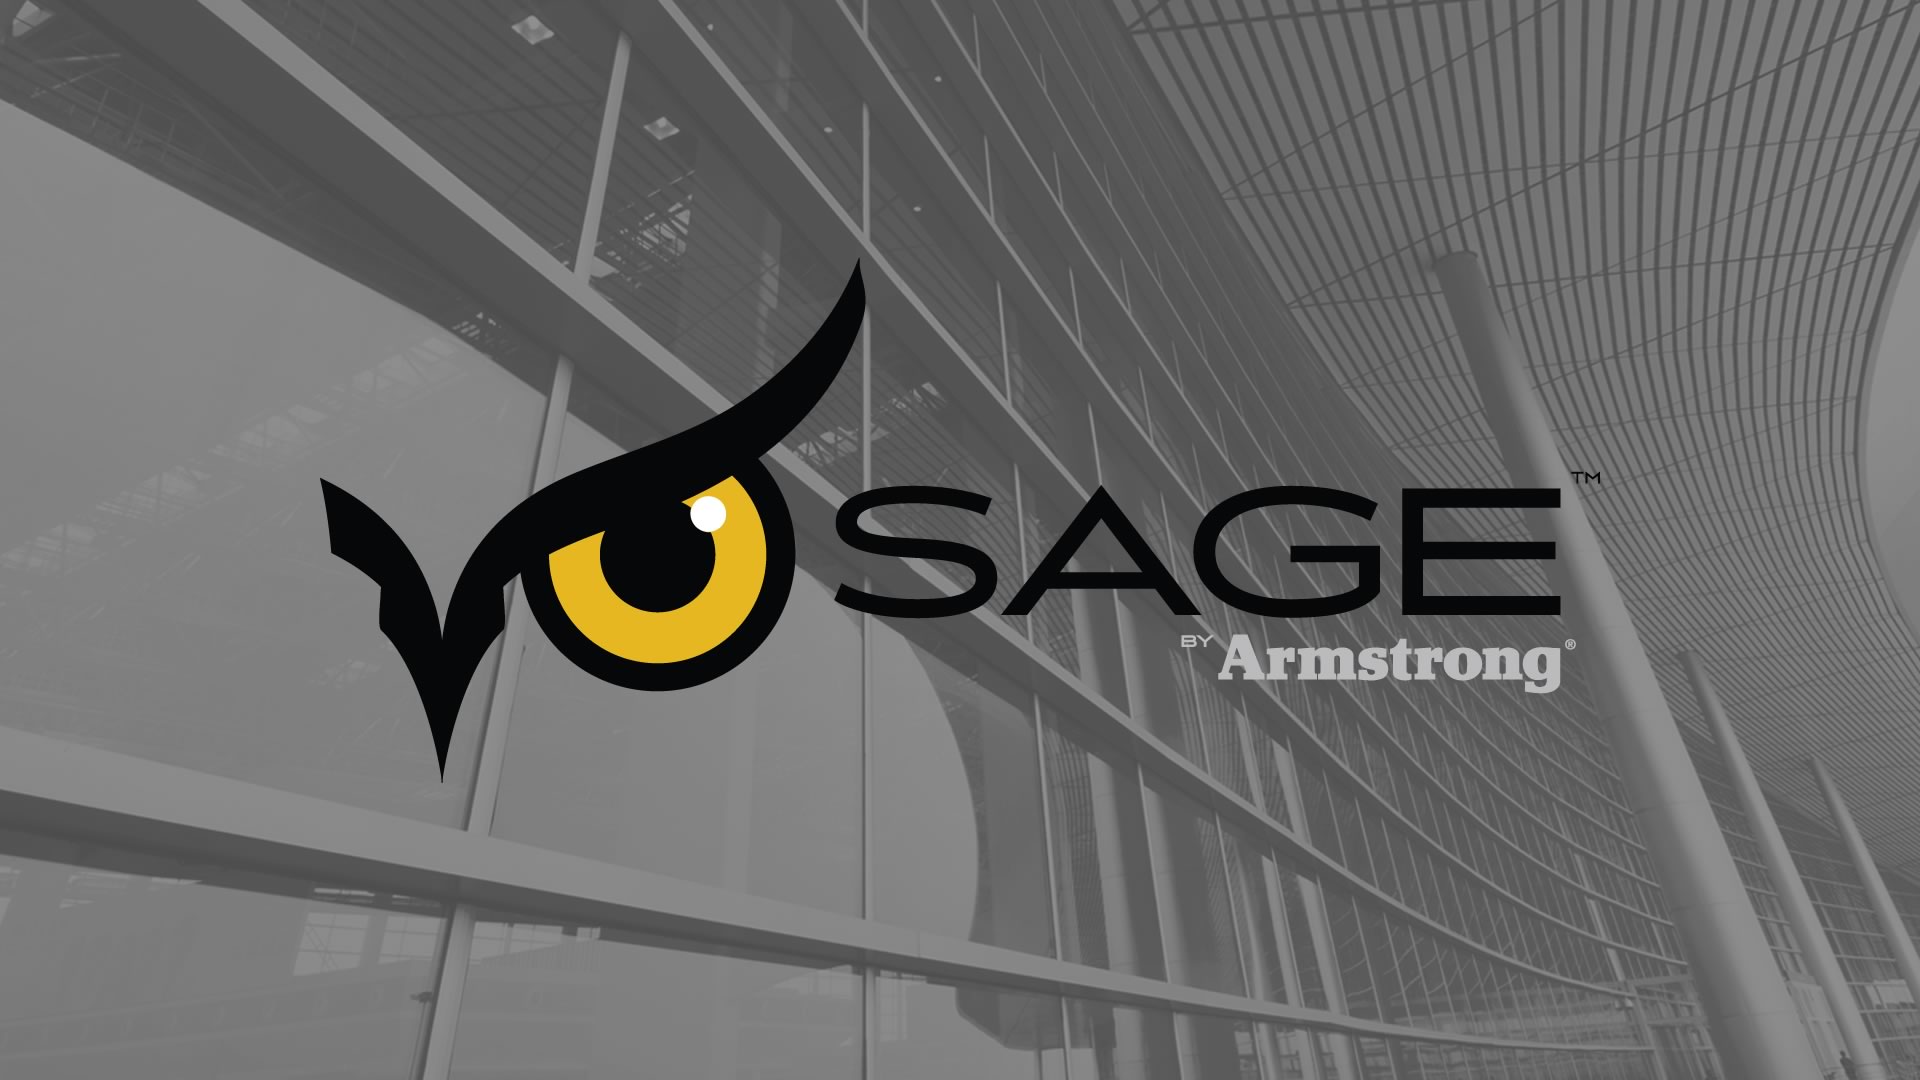 Armstrong Sage Logo